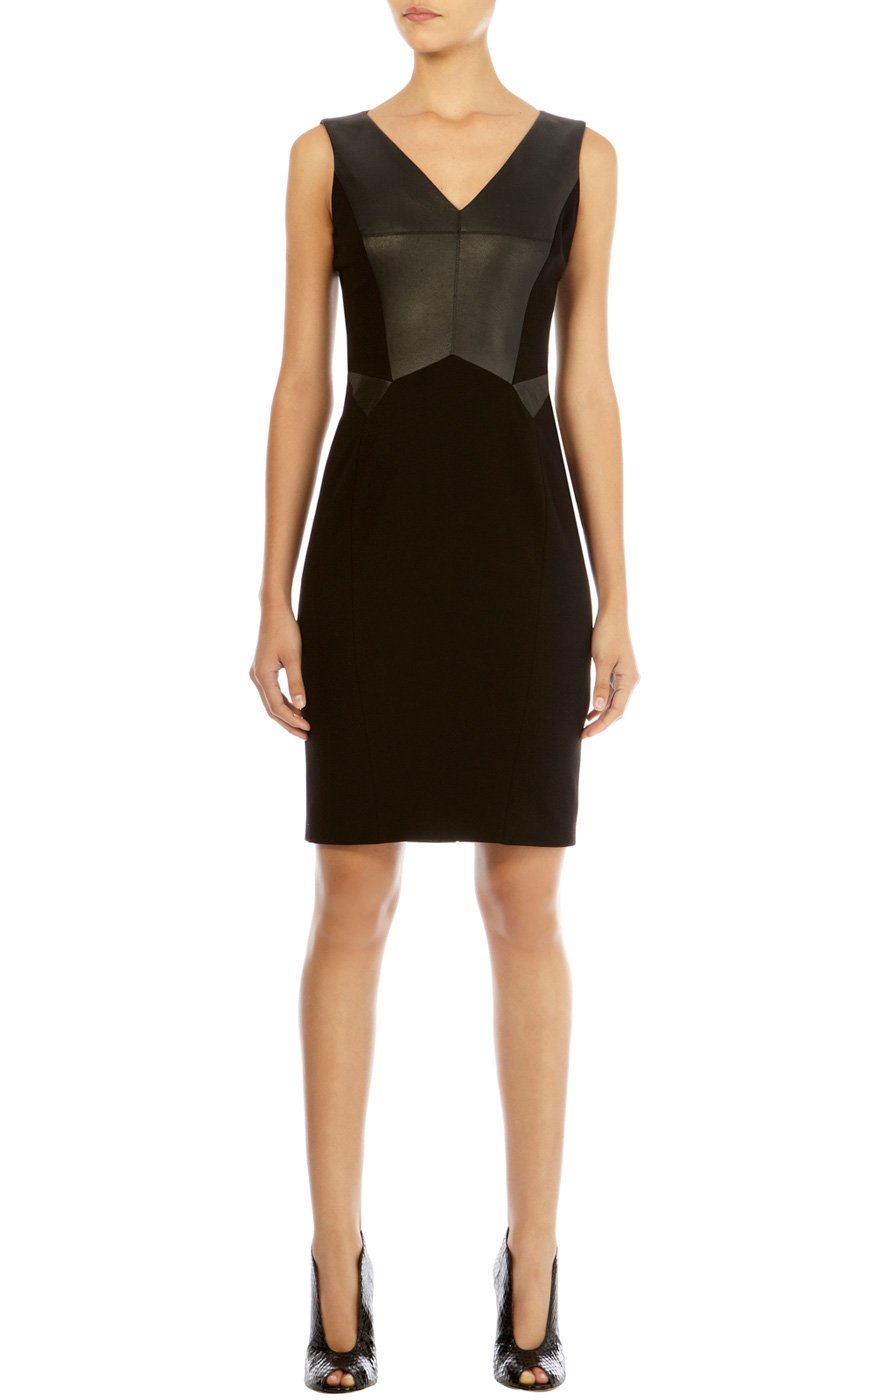 Lyst - Karen Millen Faux Leather and Jersey Pencil Dress in Black